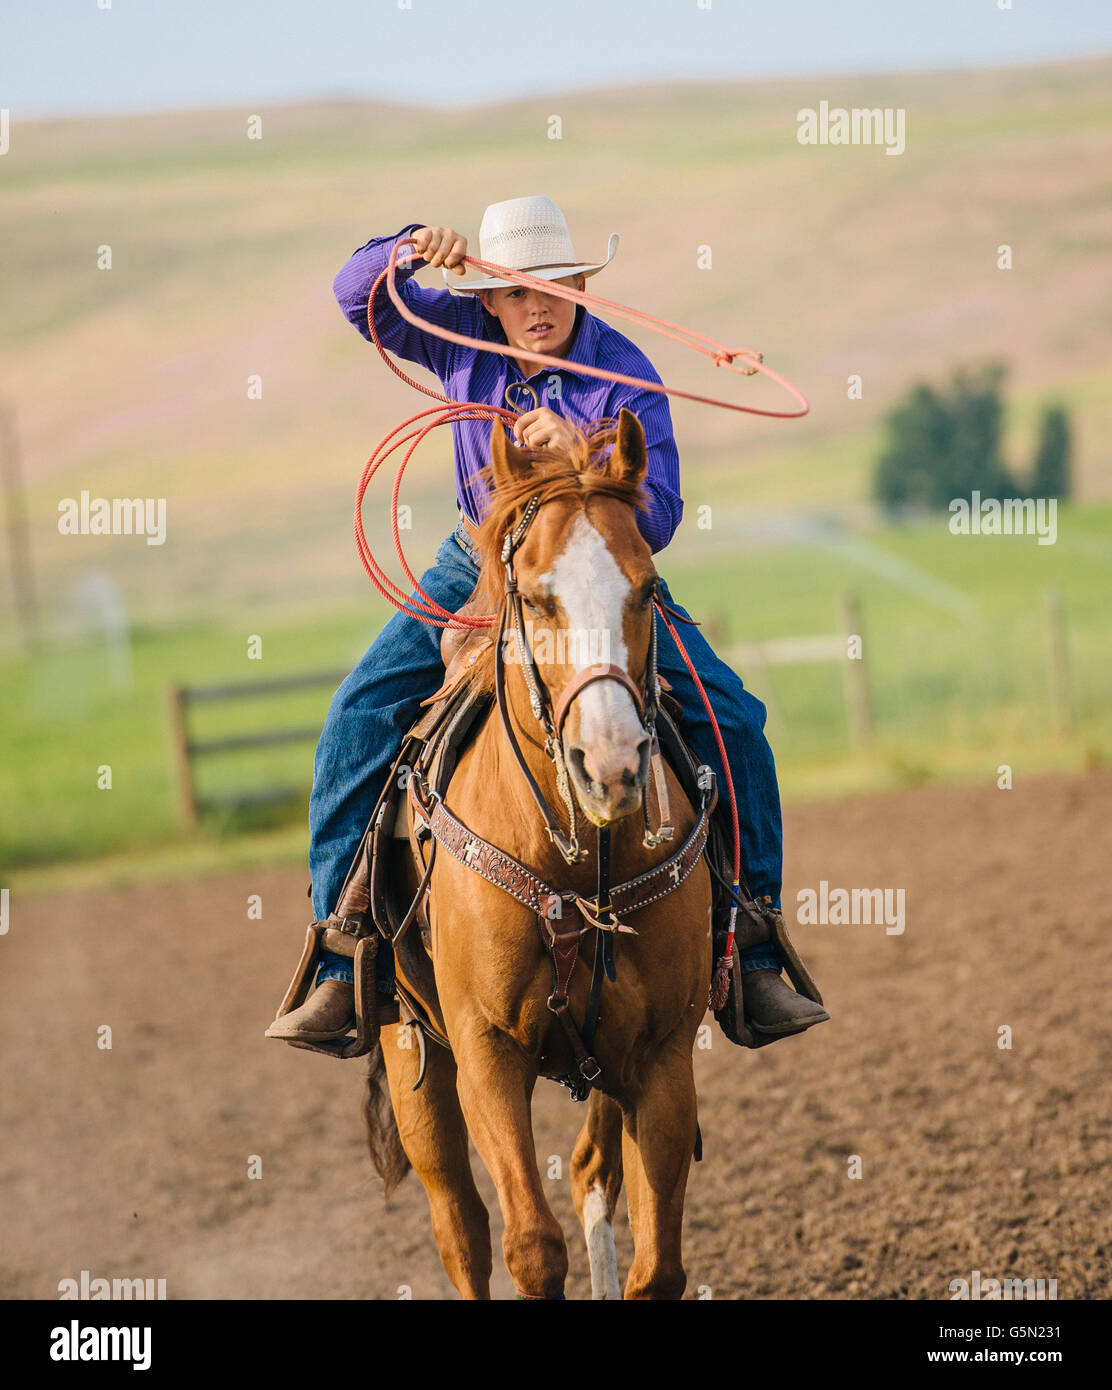 Cowboy throwing lasso on horseback Stock Photo